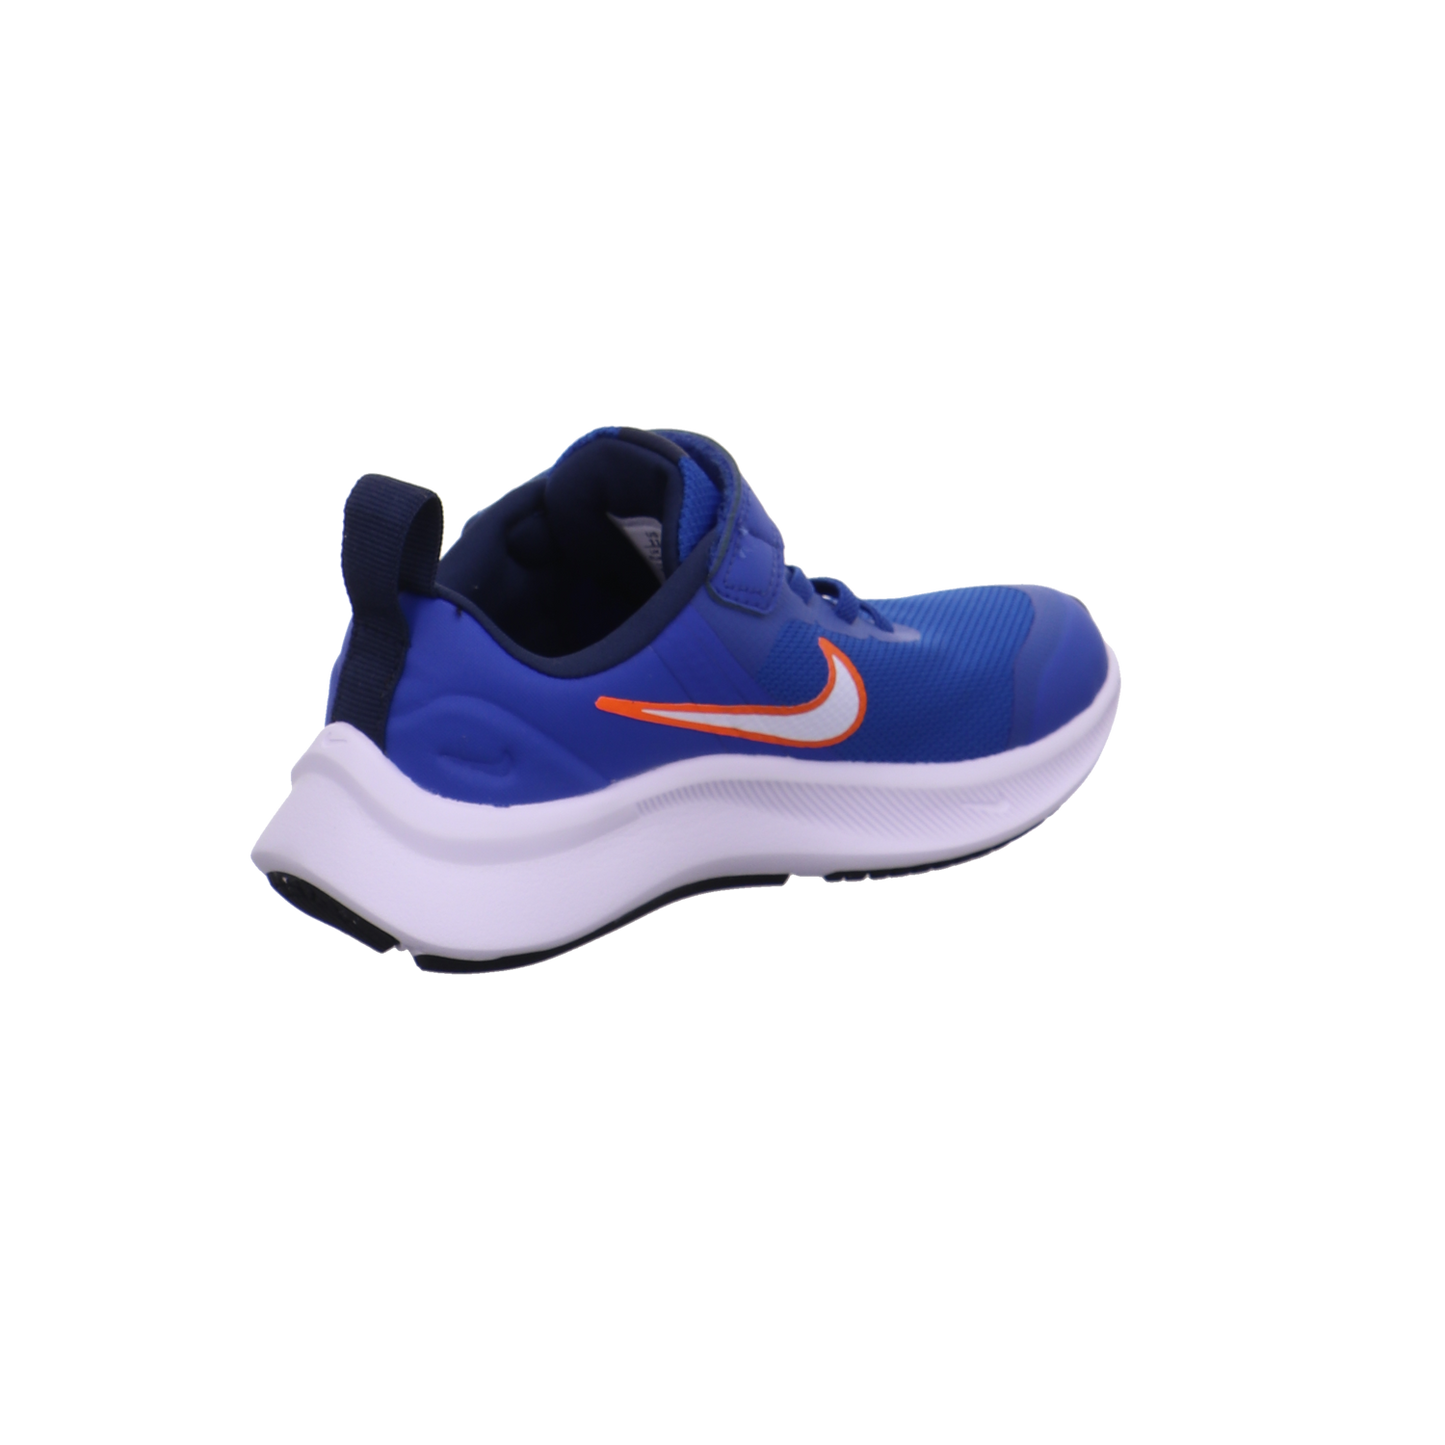 Nike Krabbel- und Lauflernschuhe blau kombi Bild5